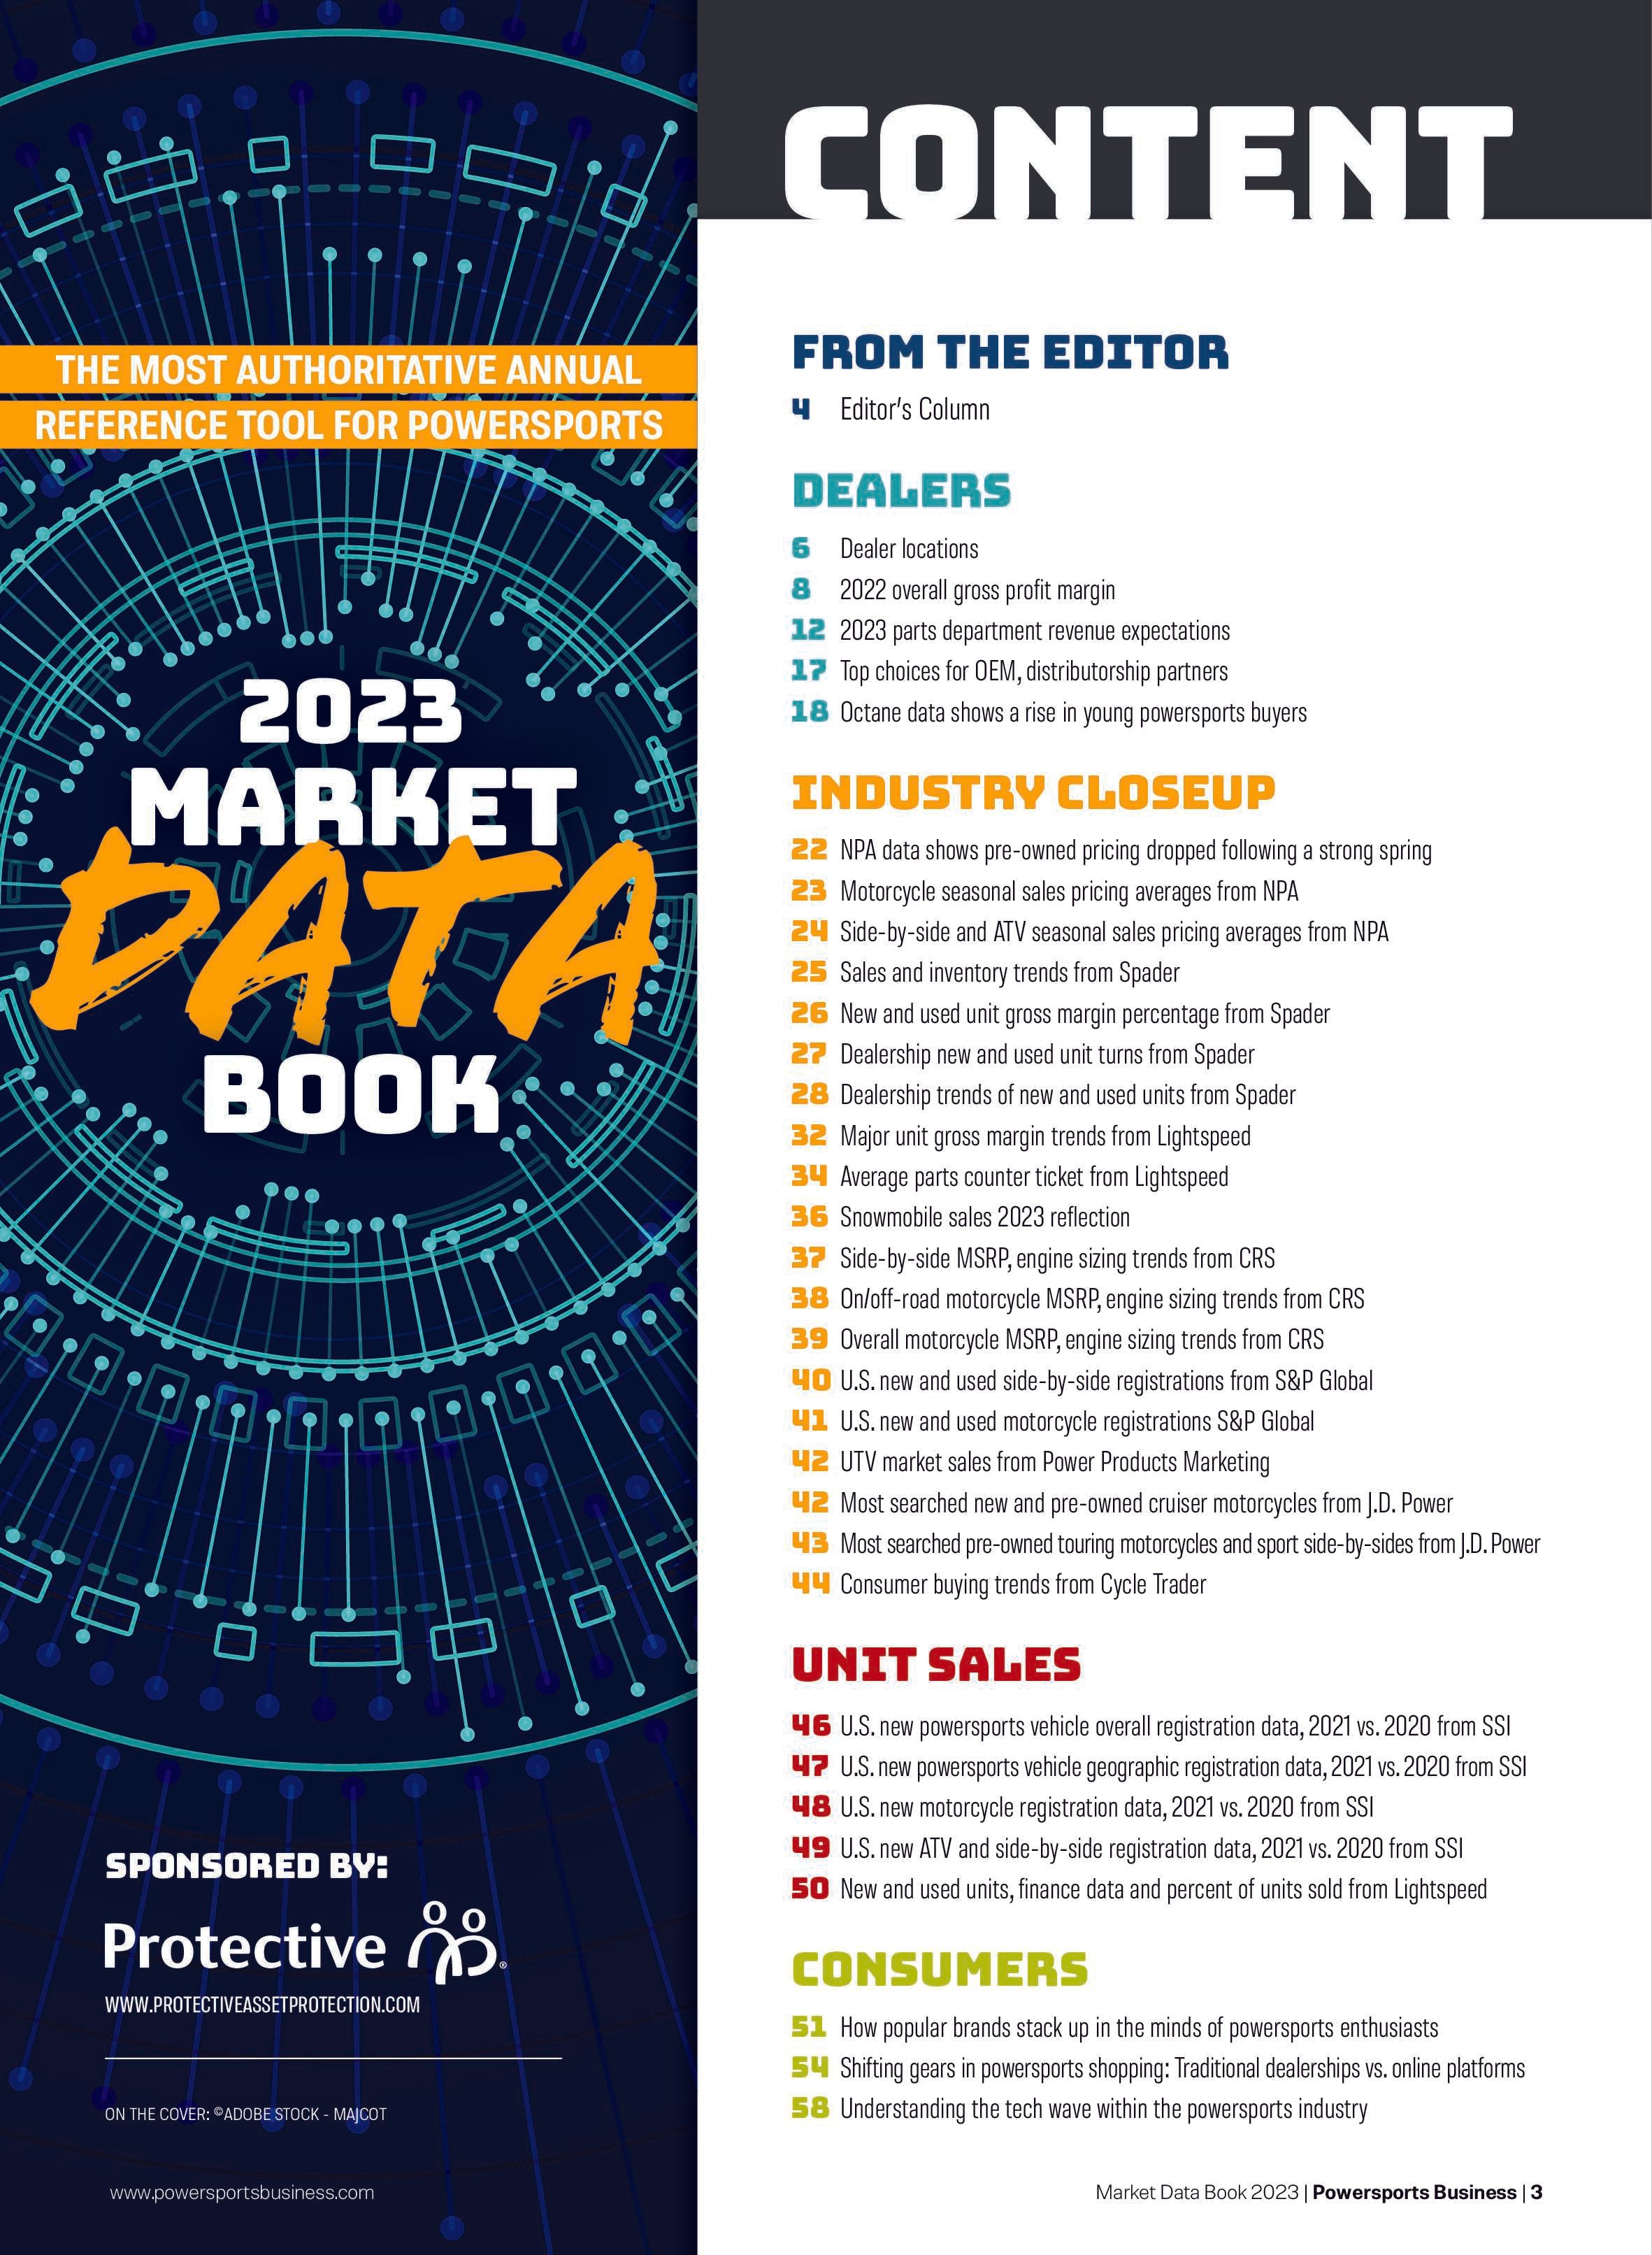 Powersports Business 2023 Market Data Book